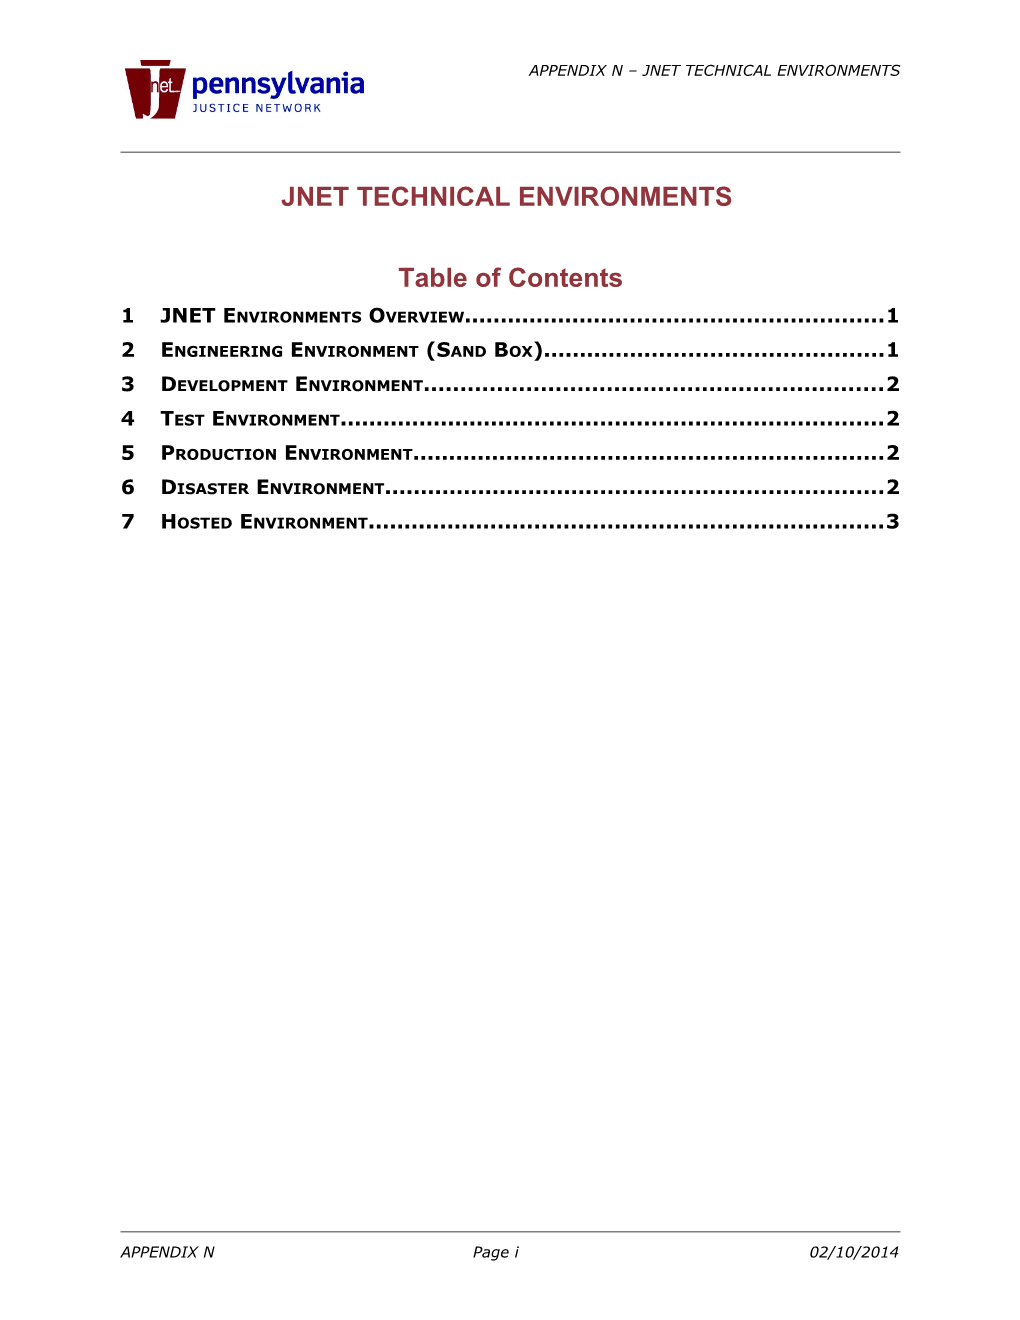 Jnet Technical Environments